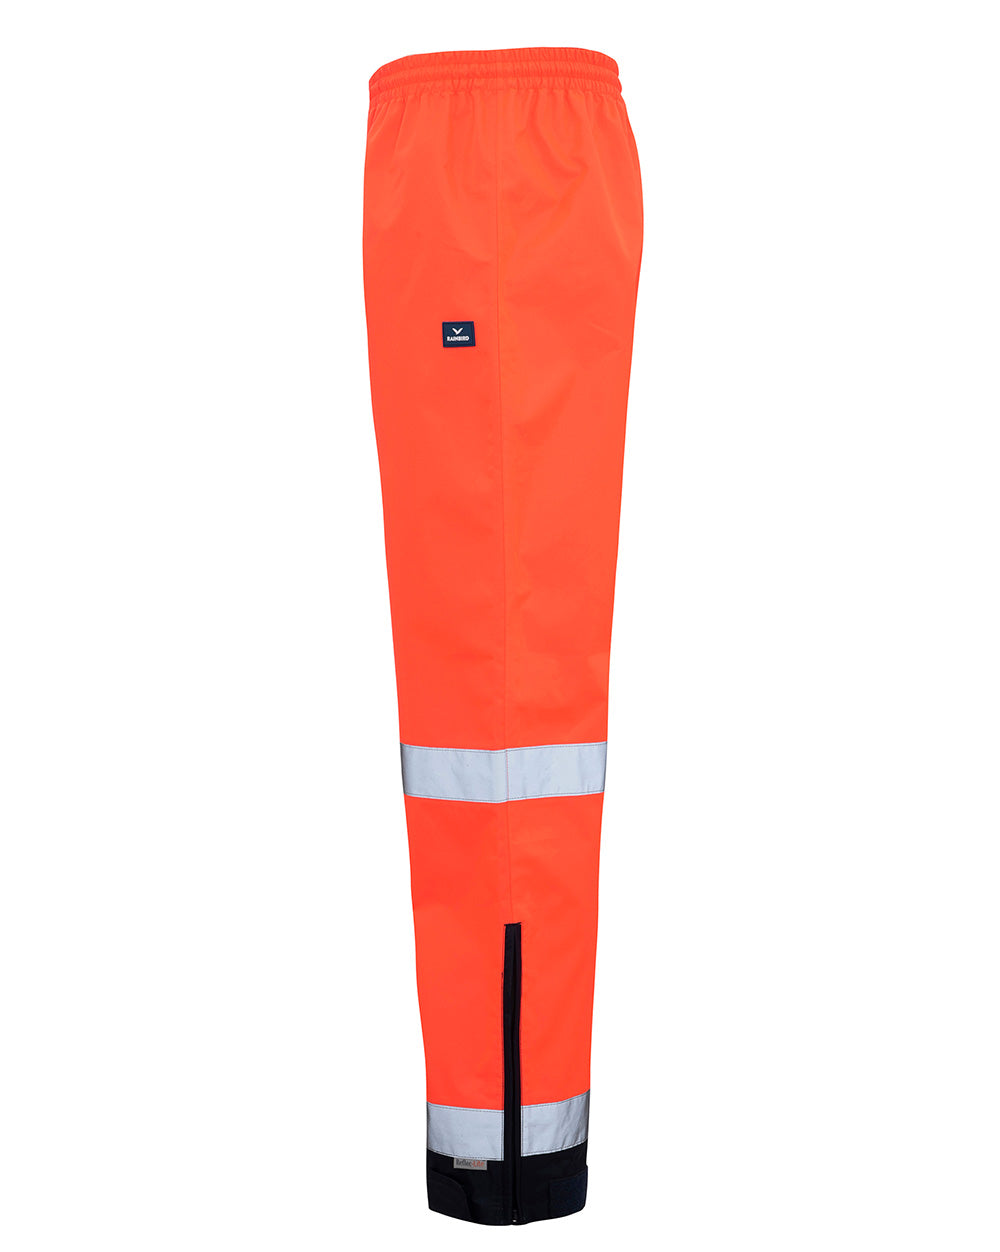 Utility Pant in Fluoro Orange & Navy